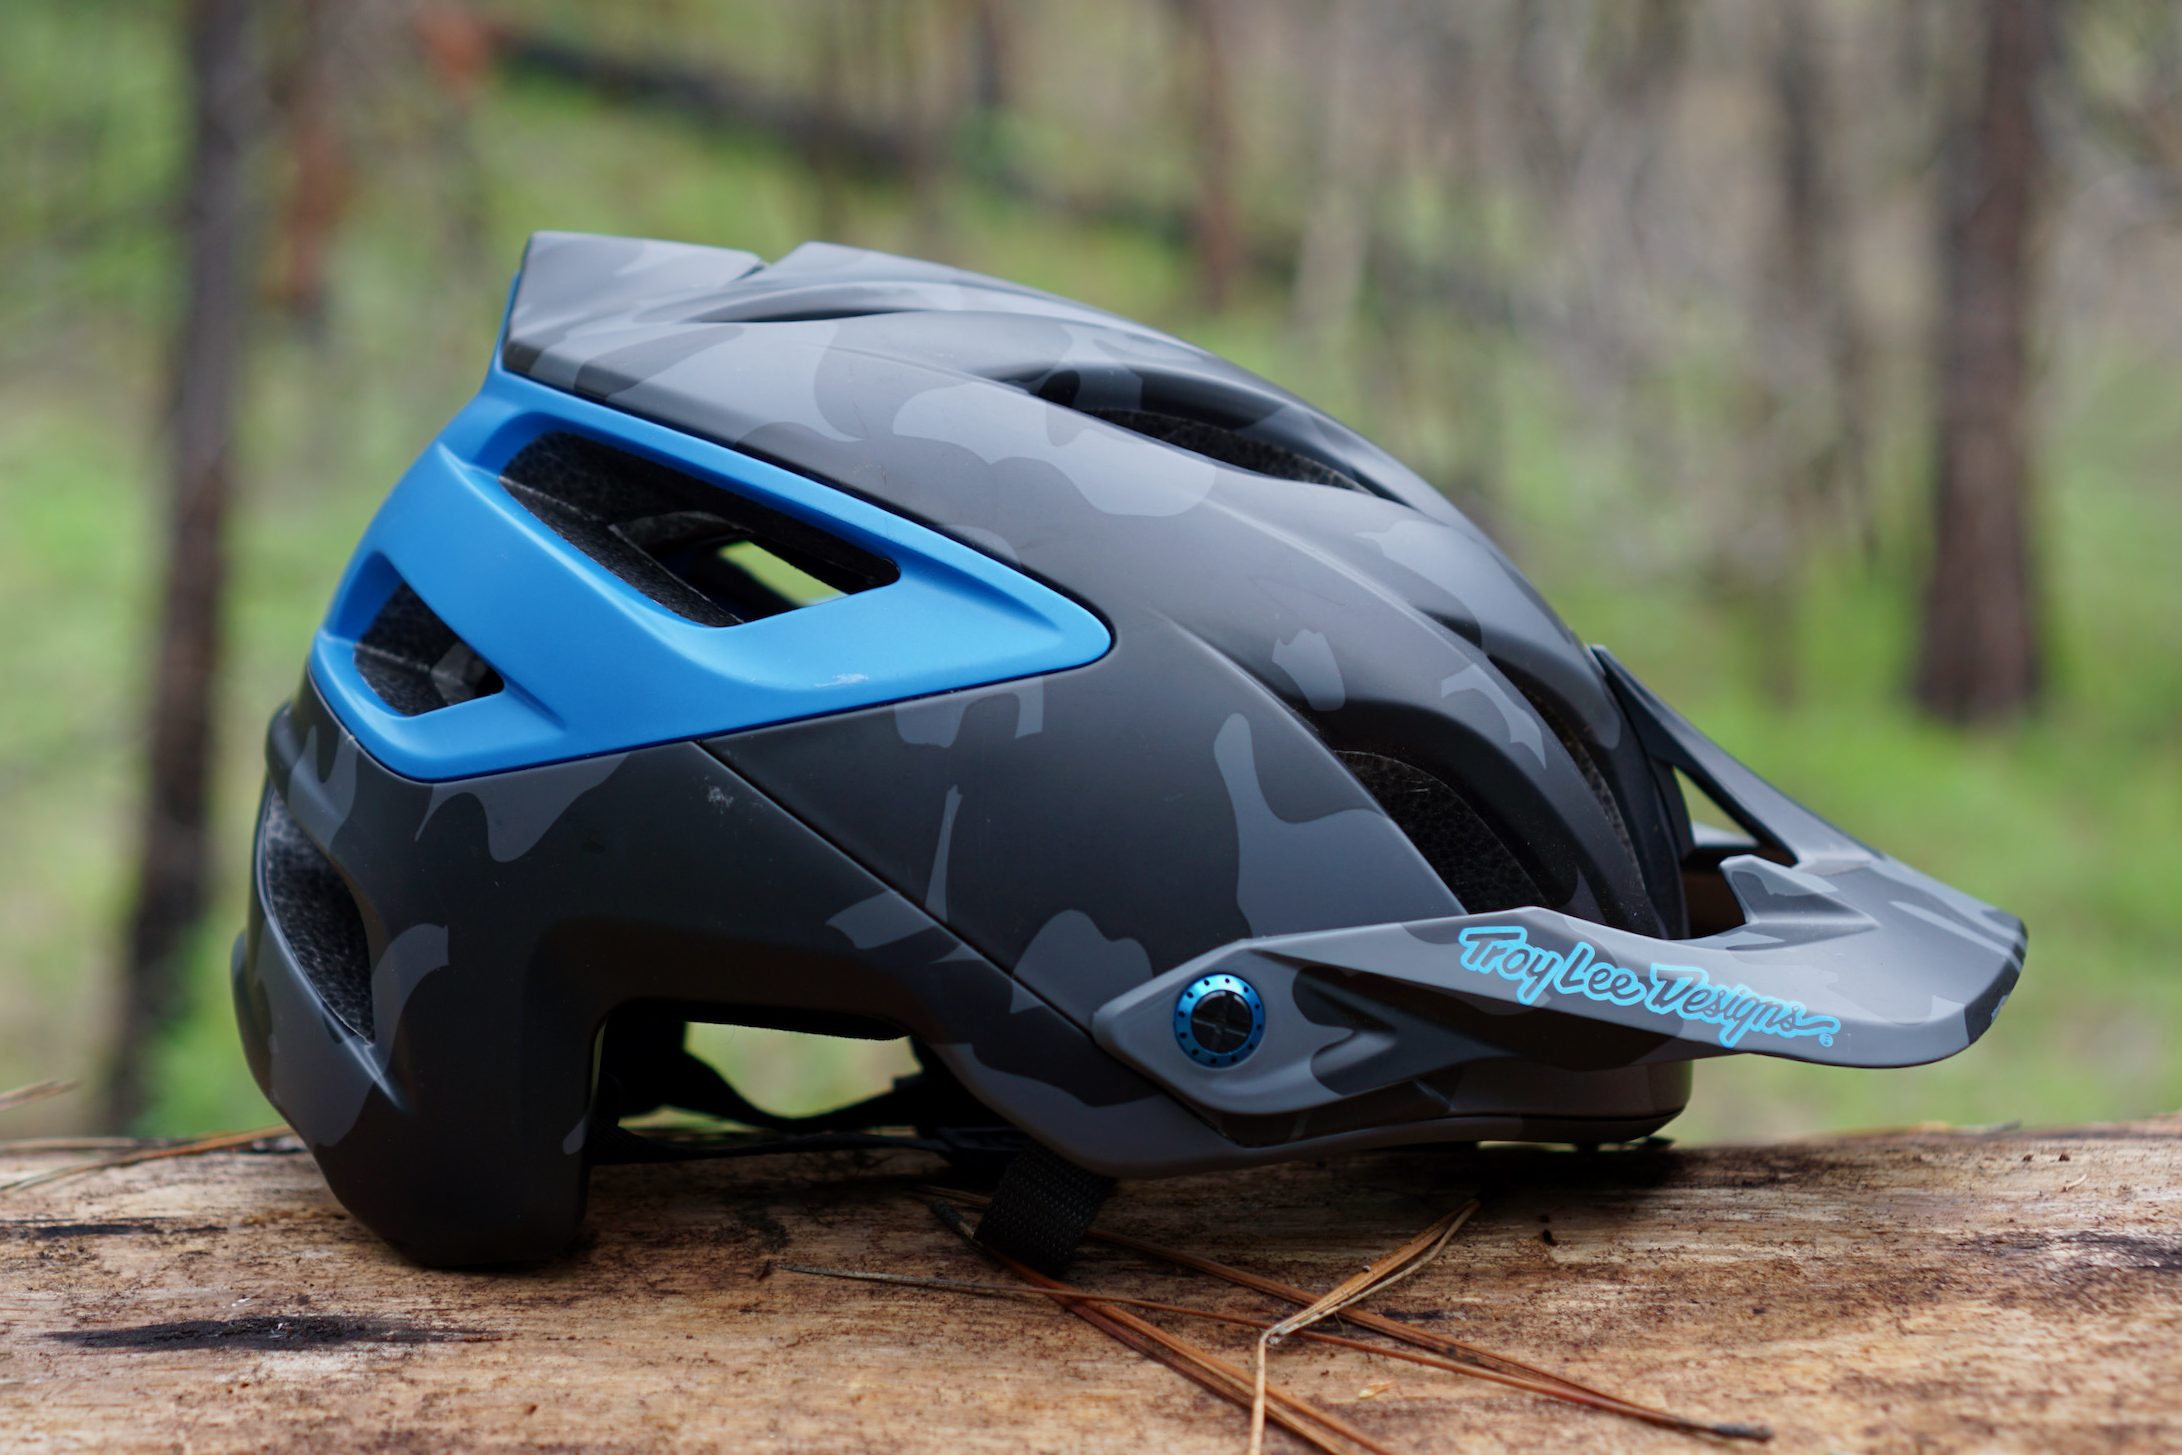 Black and blue Troy Lee Designs A3 mountain bike helmet sitting on a log.